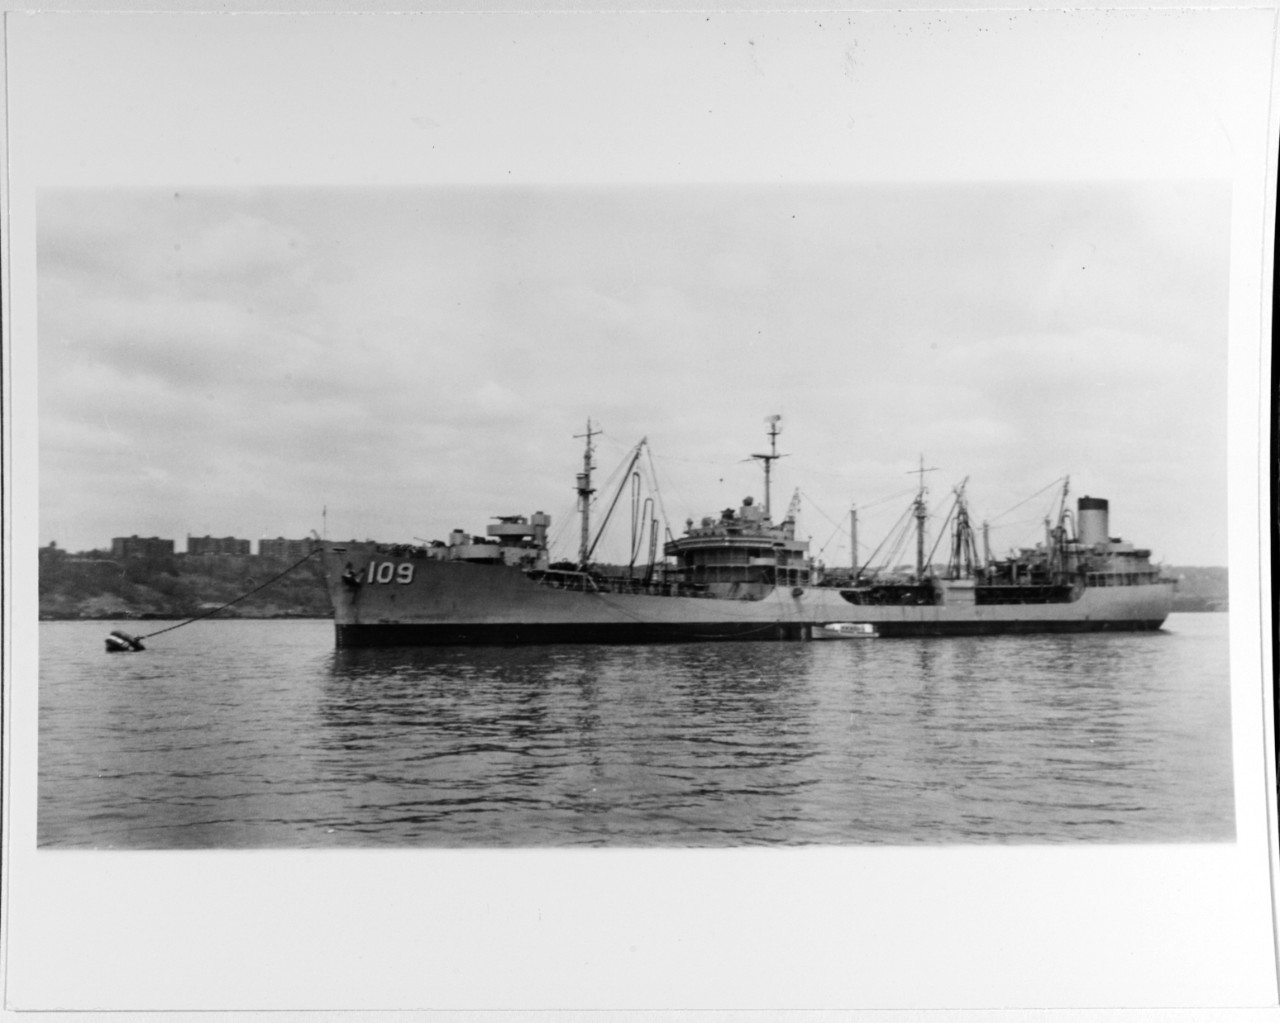 USS WACAMAW (AO-109)